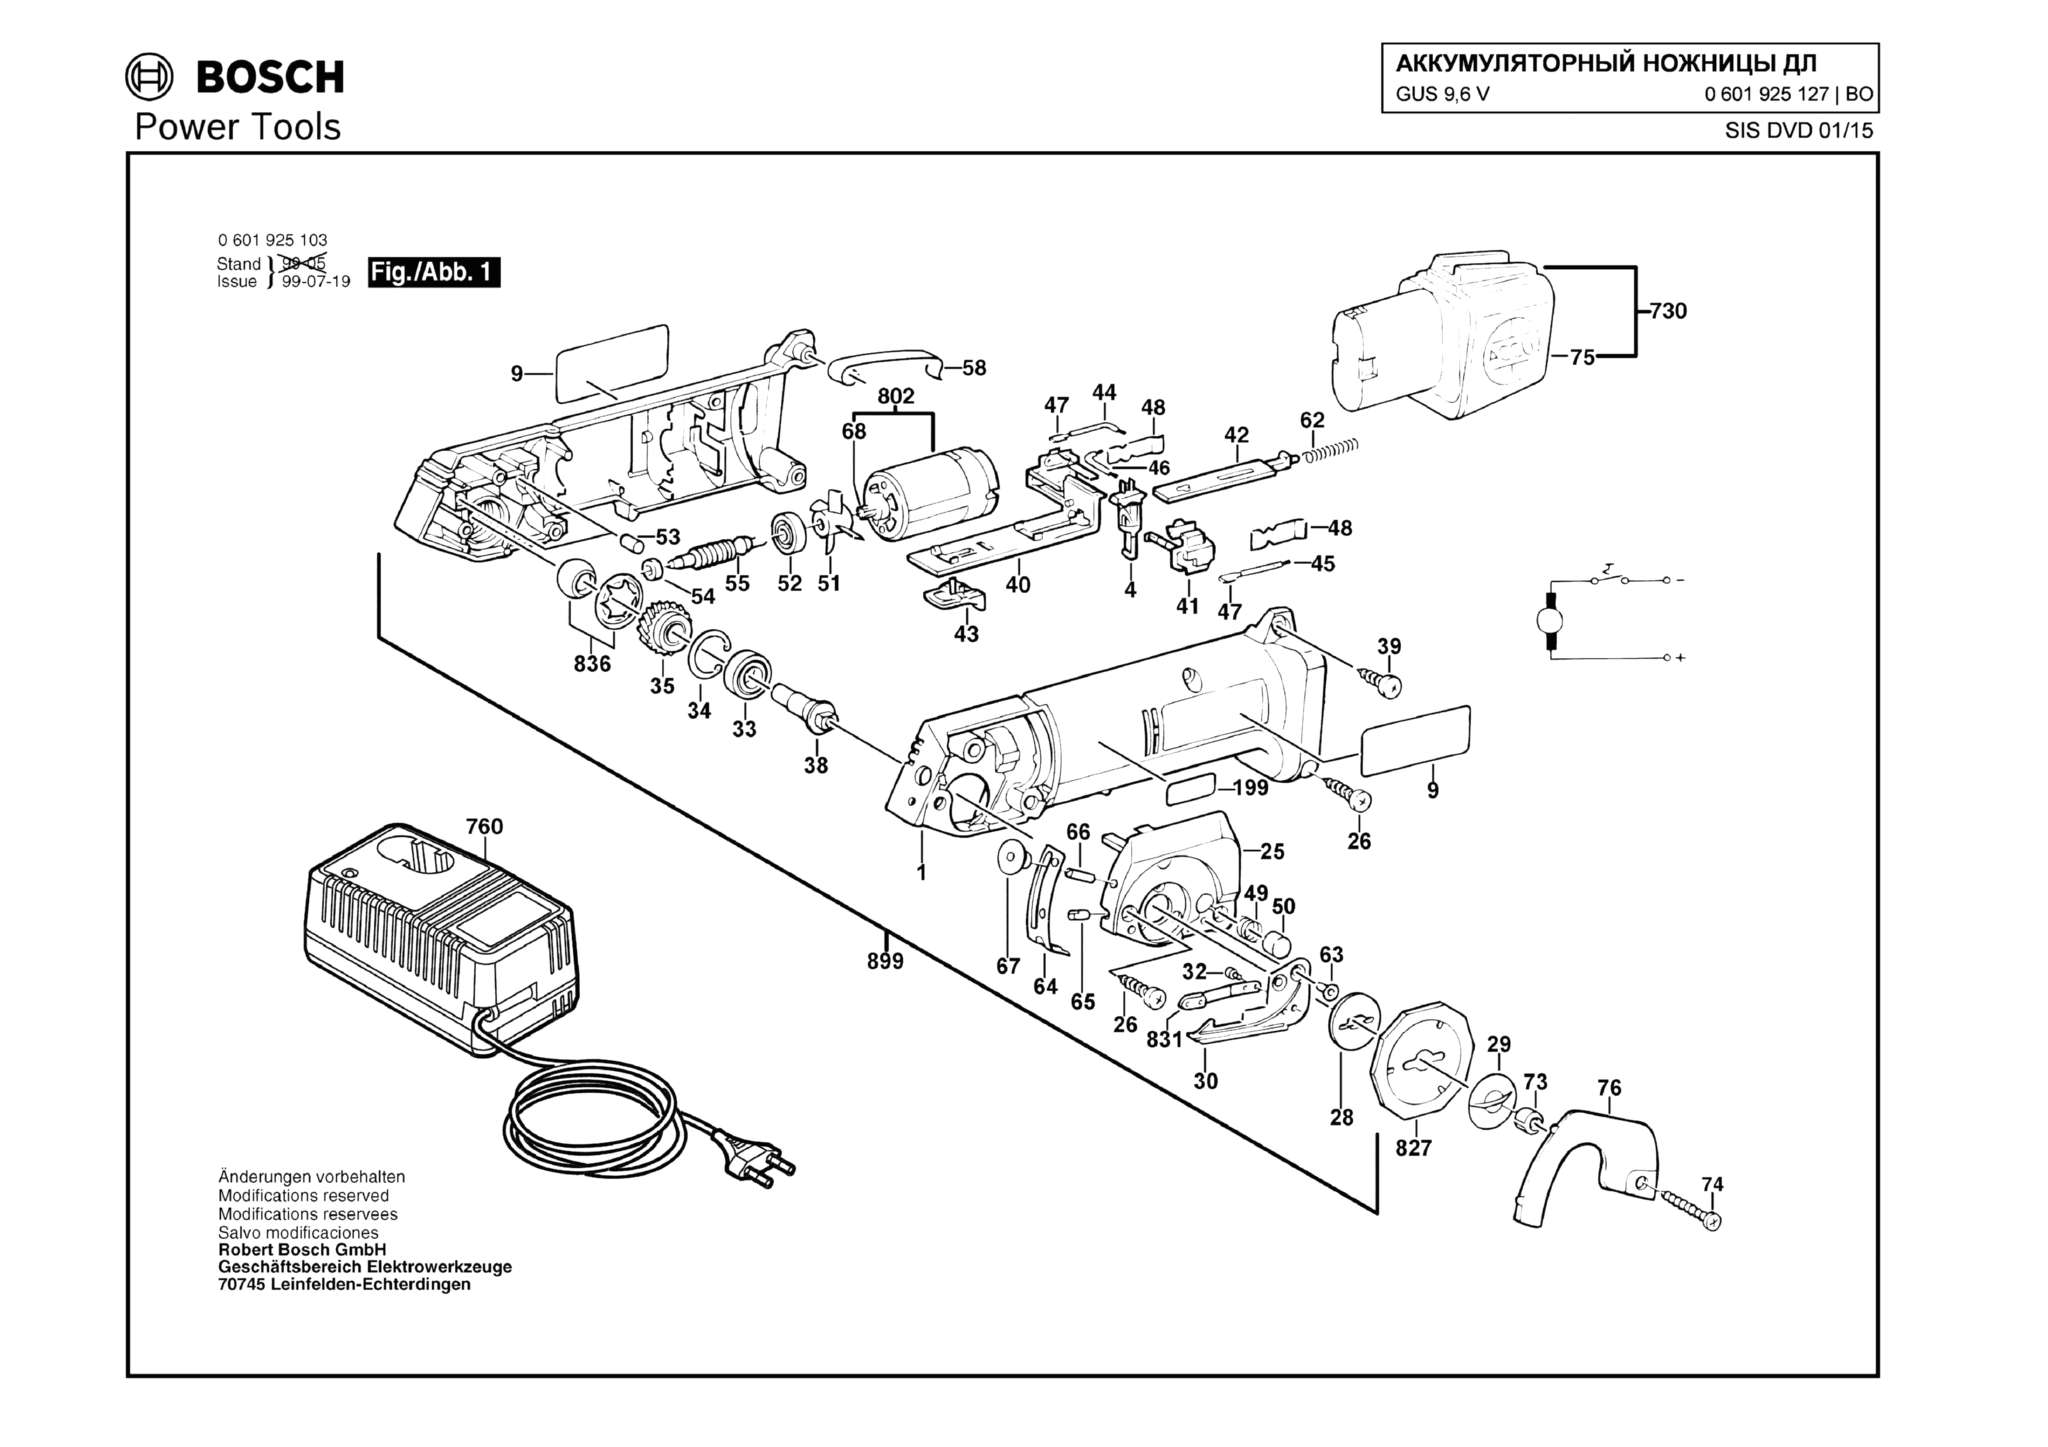 Запчасти, схема и деталировка Bosch GUS 9,6 V (ТИП 0601925127)